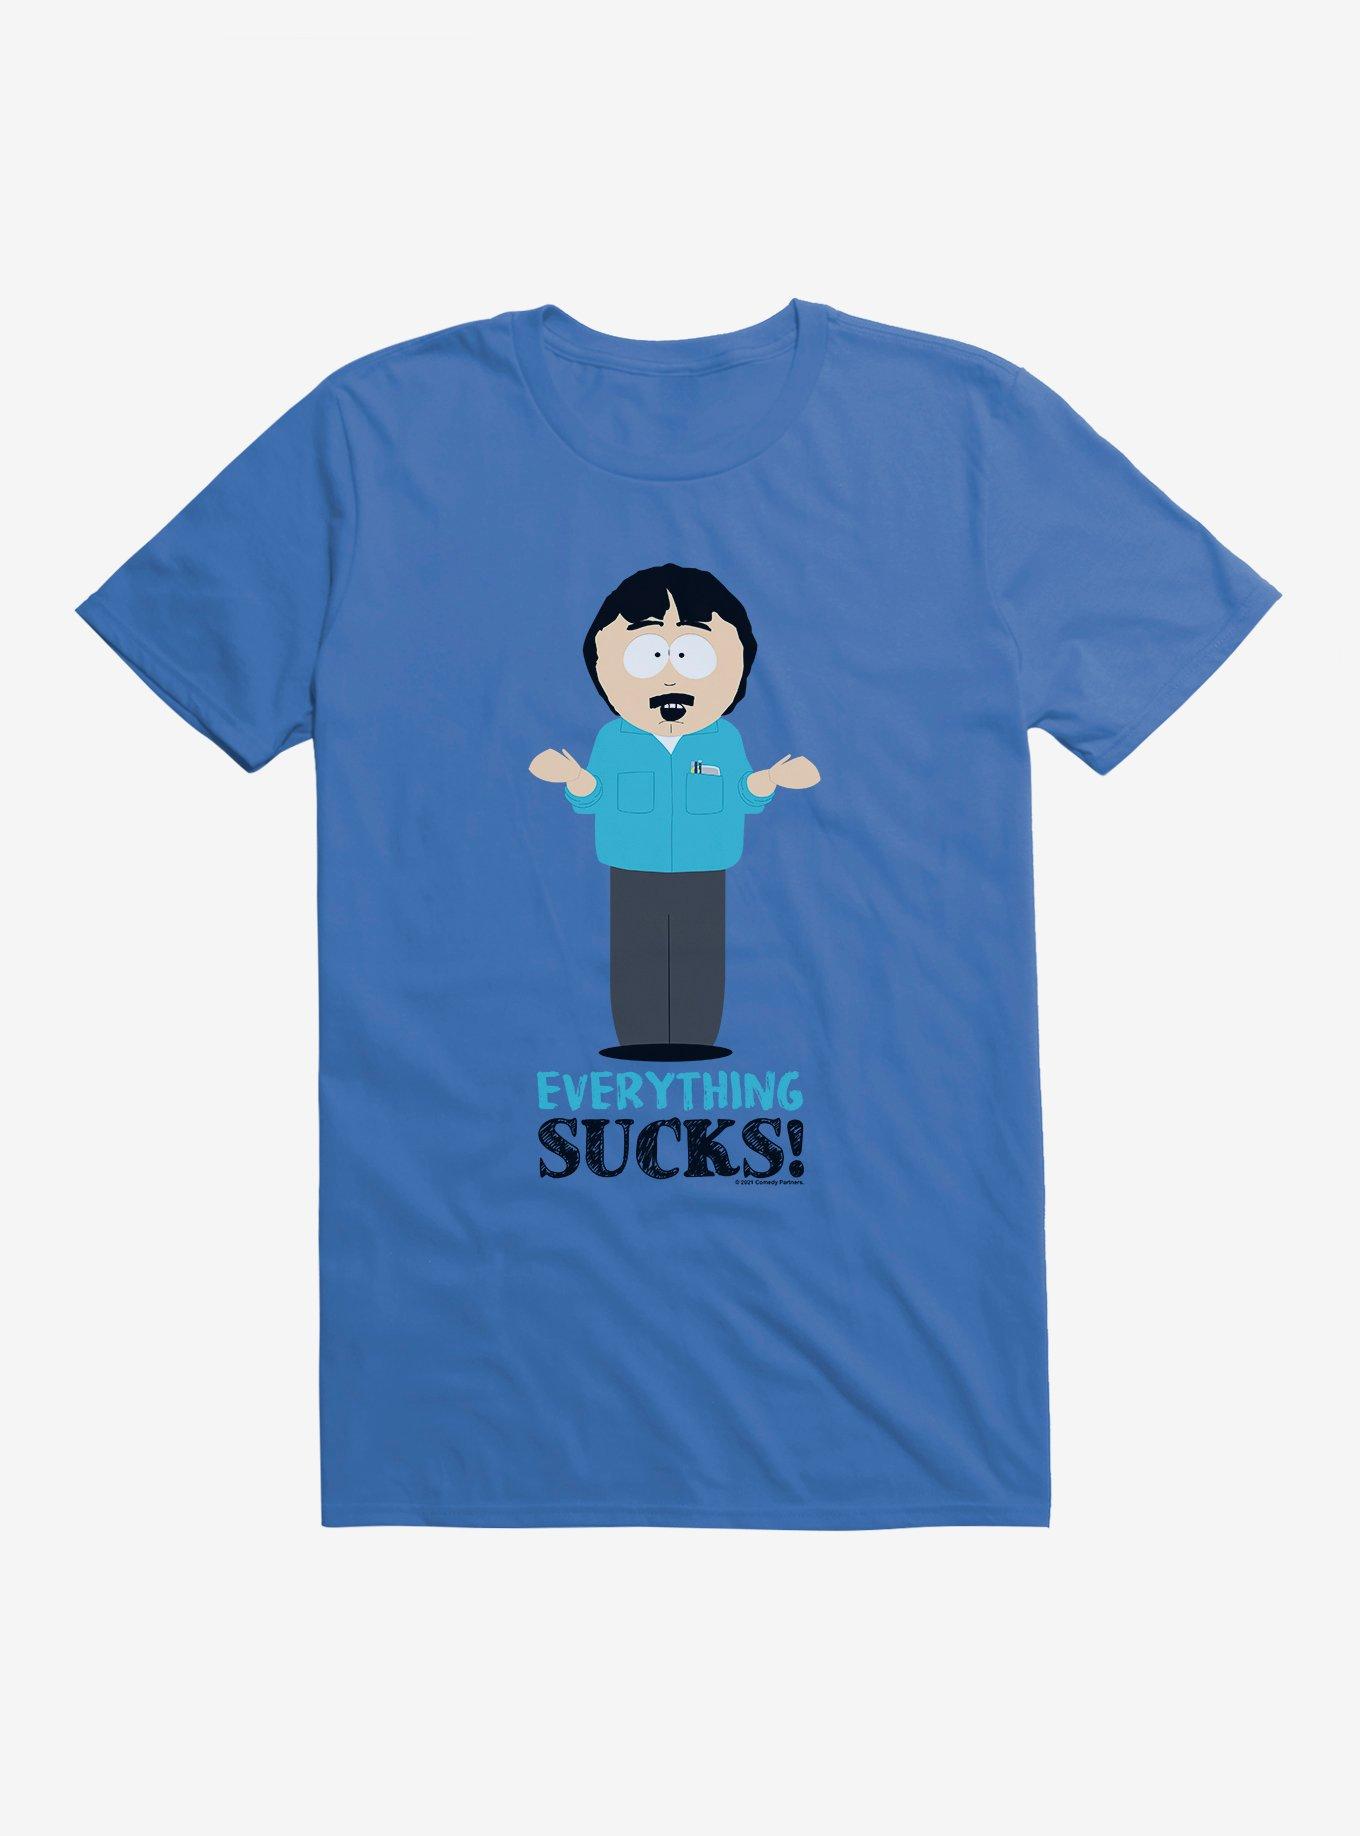 South Park Season Reference Everything Sucks T-Shirt, ROYAL BLUE, hi-res